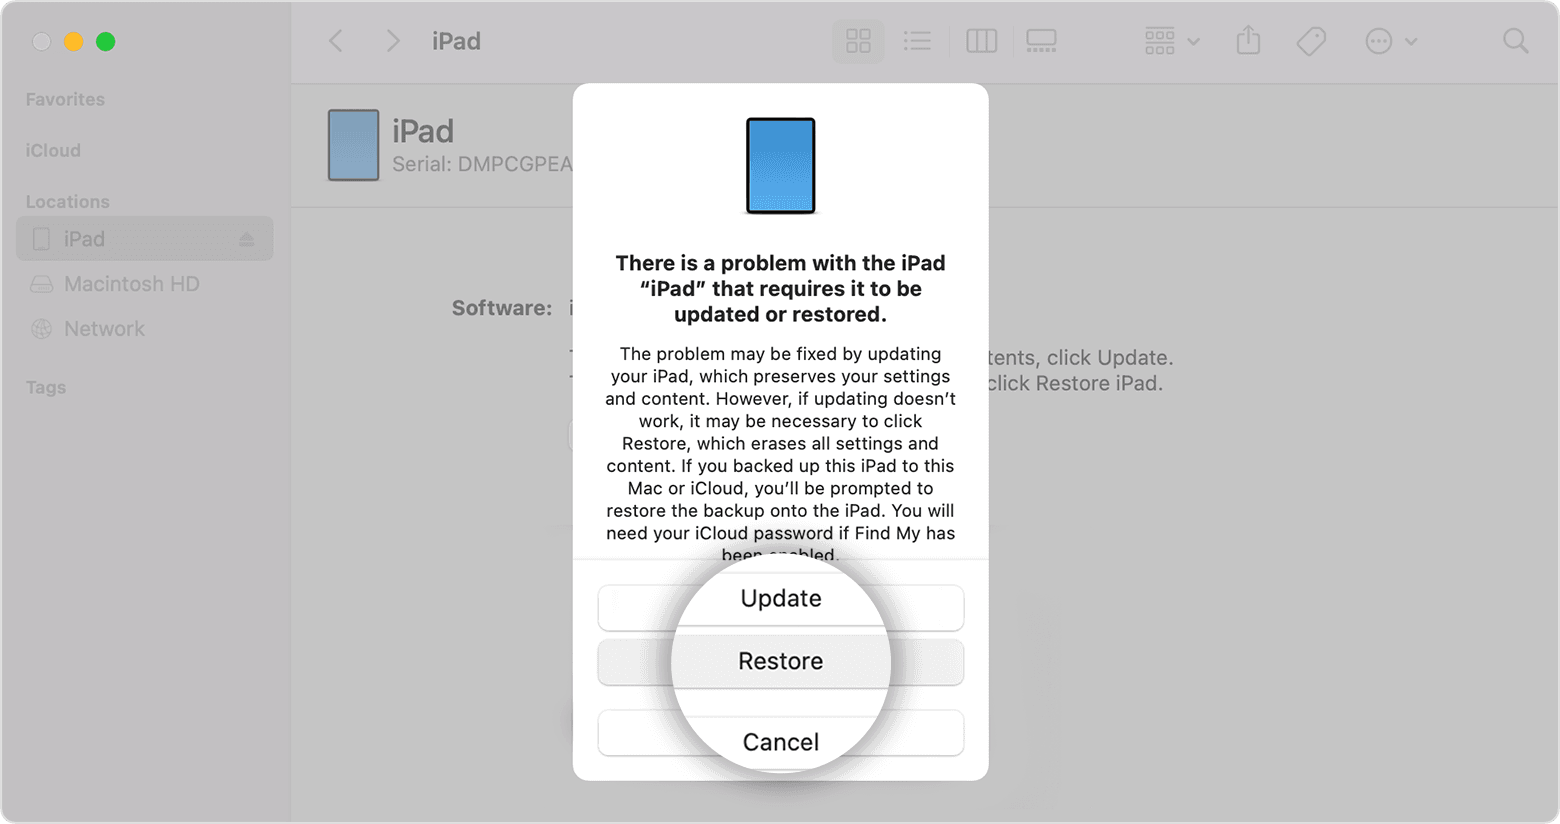 iPad screen showing Restore button